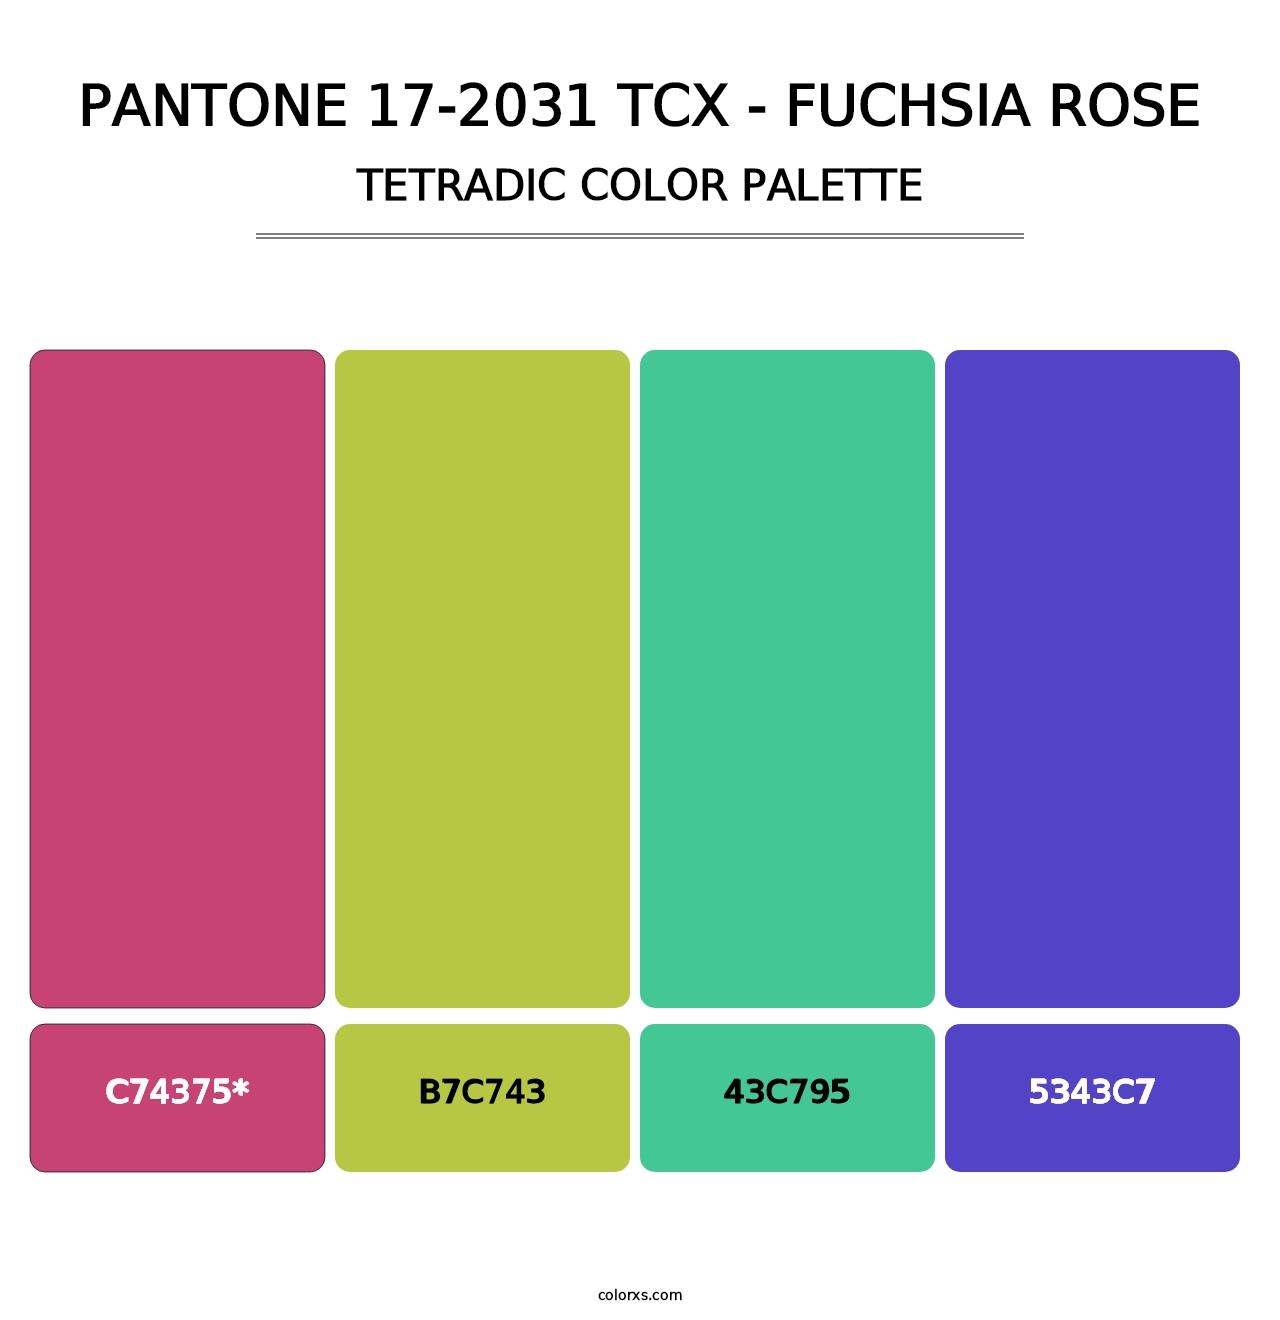 PANTONE 17-2031 TCX - Fuchsia Rose - Tetradic Color Palette